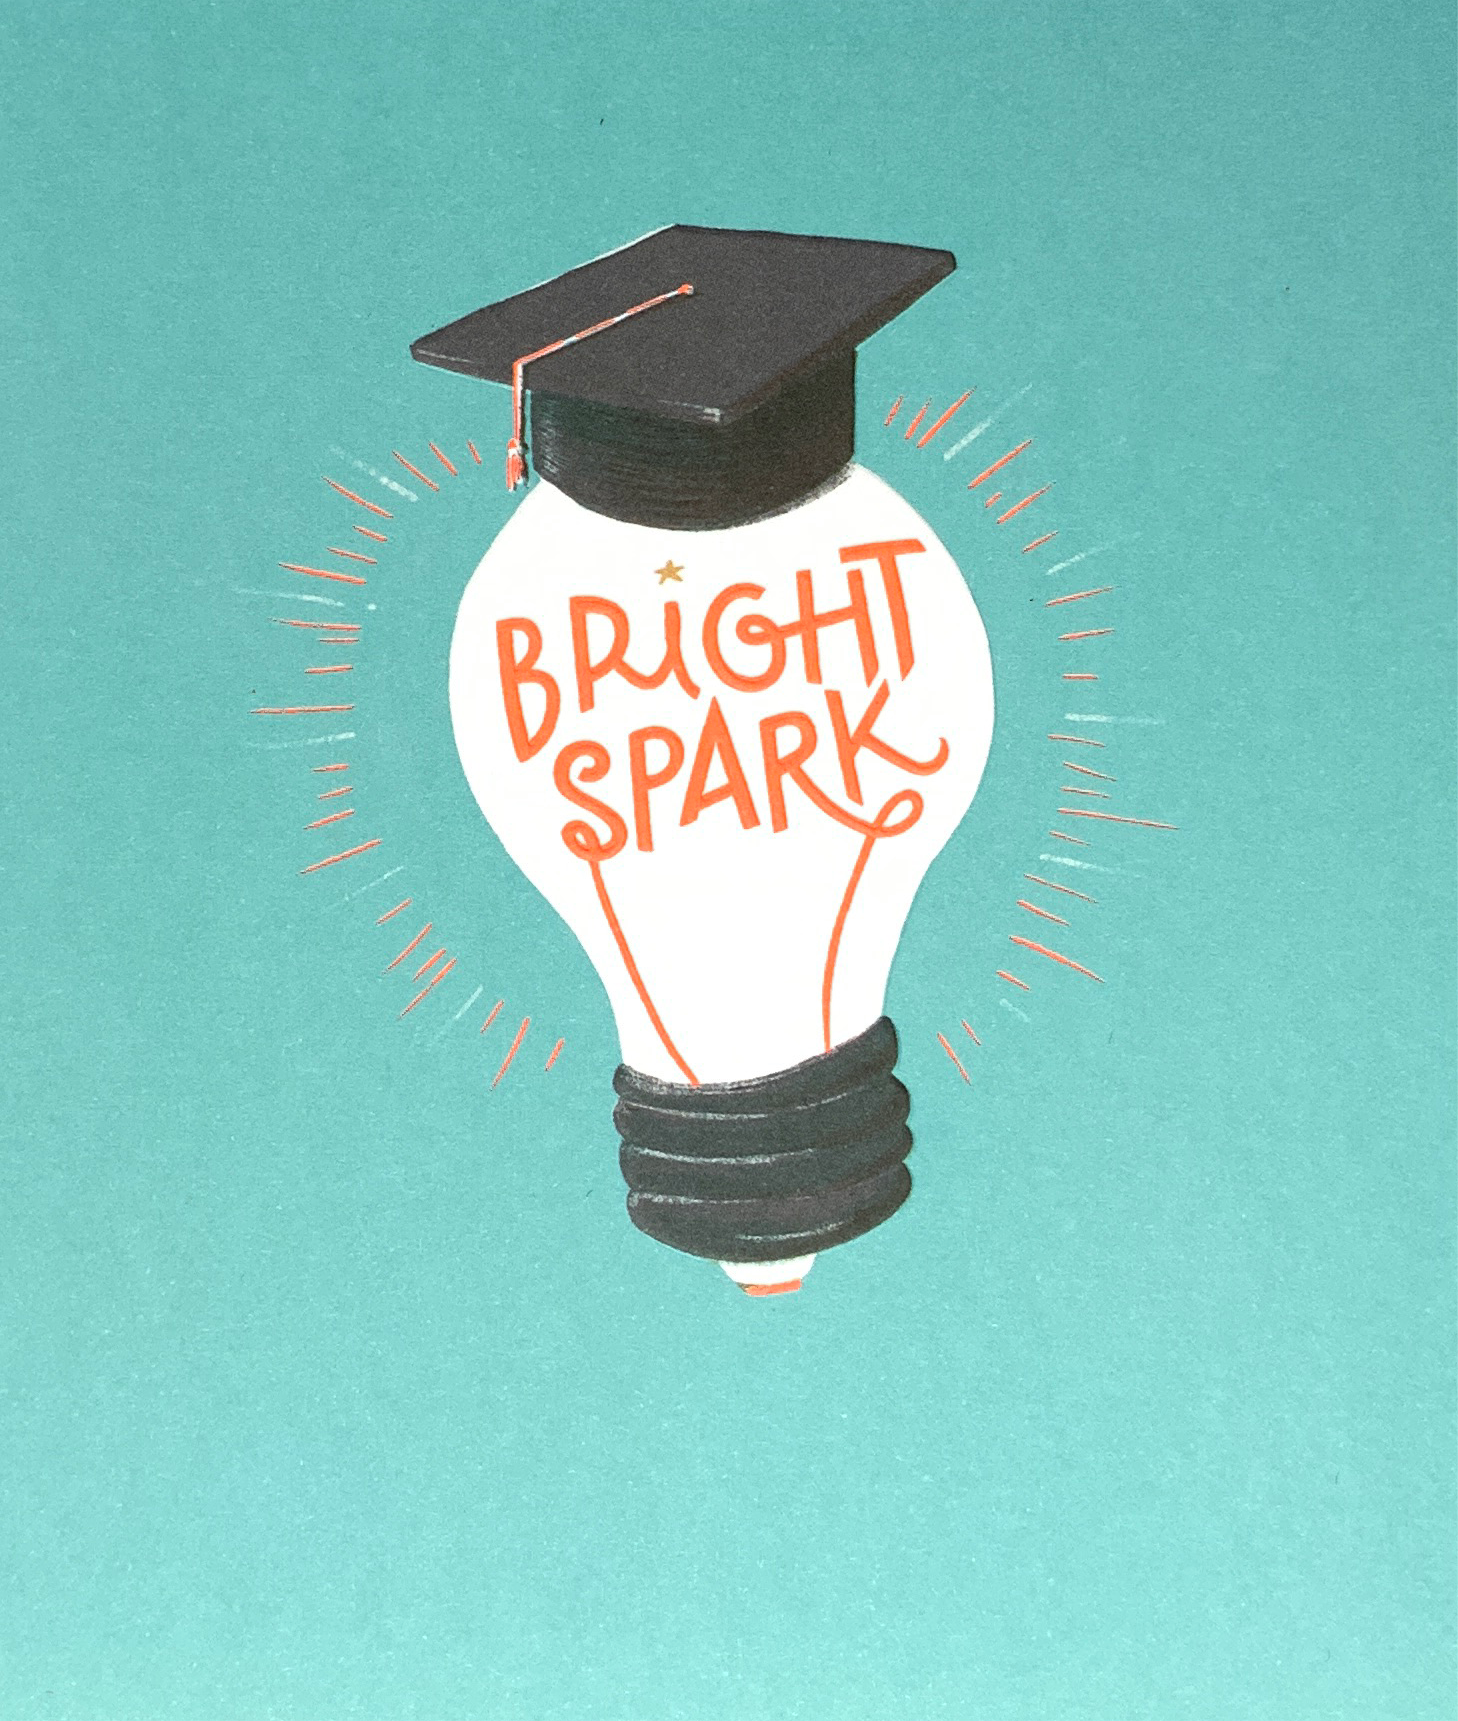 Graduate Card - Bright Spark